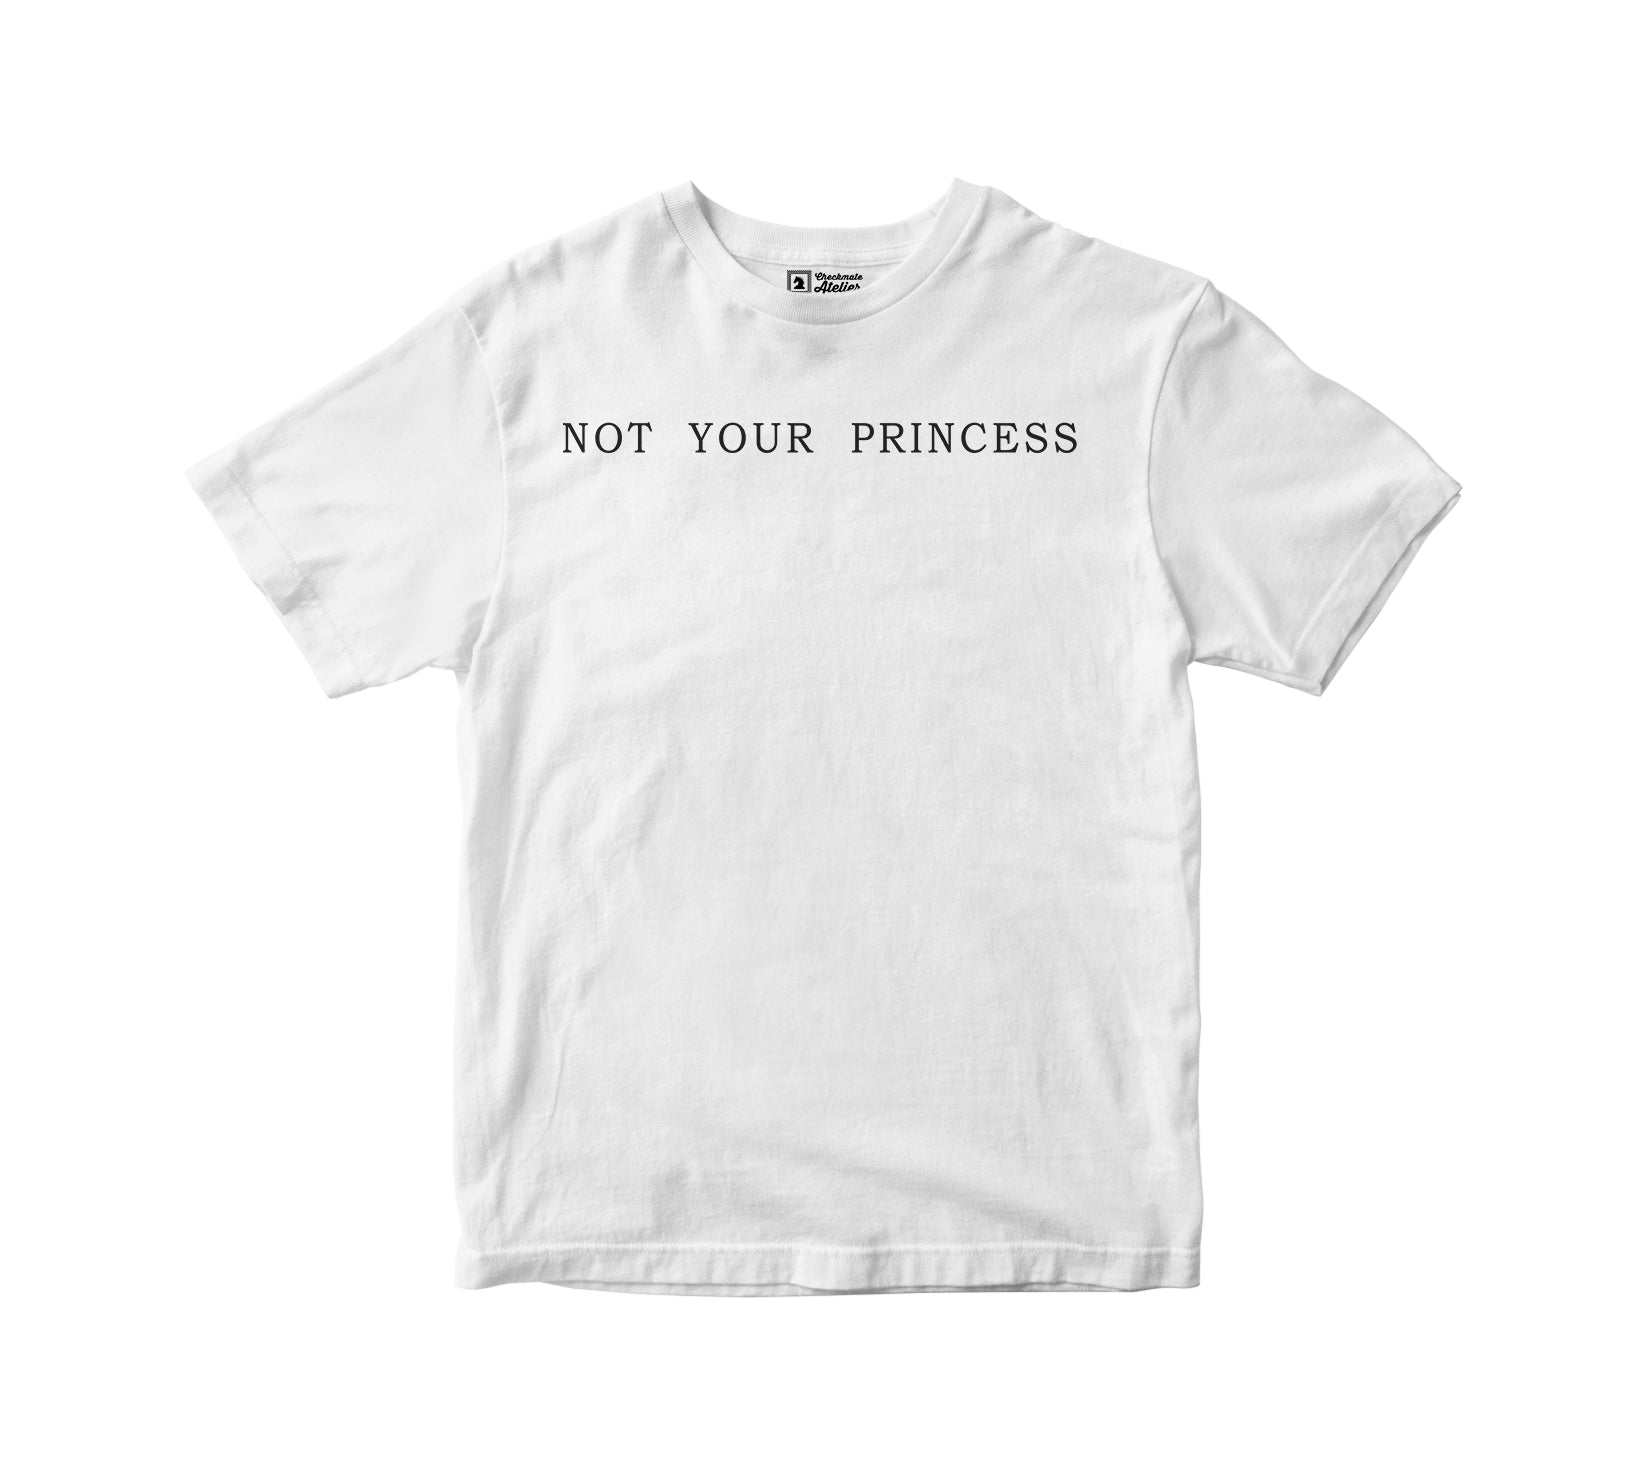 NOT YOUR PRINCESS WHITE B&W T-Shirt